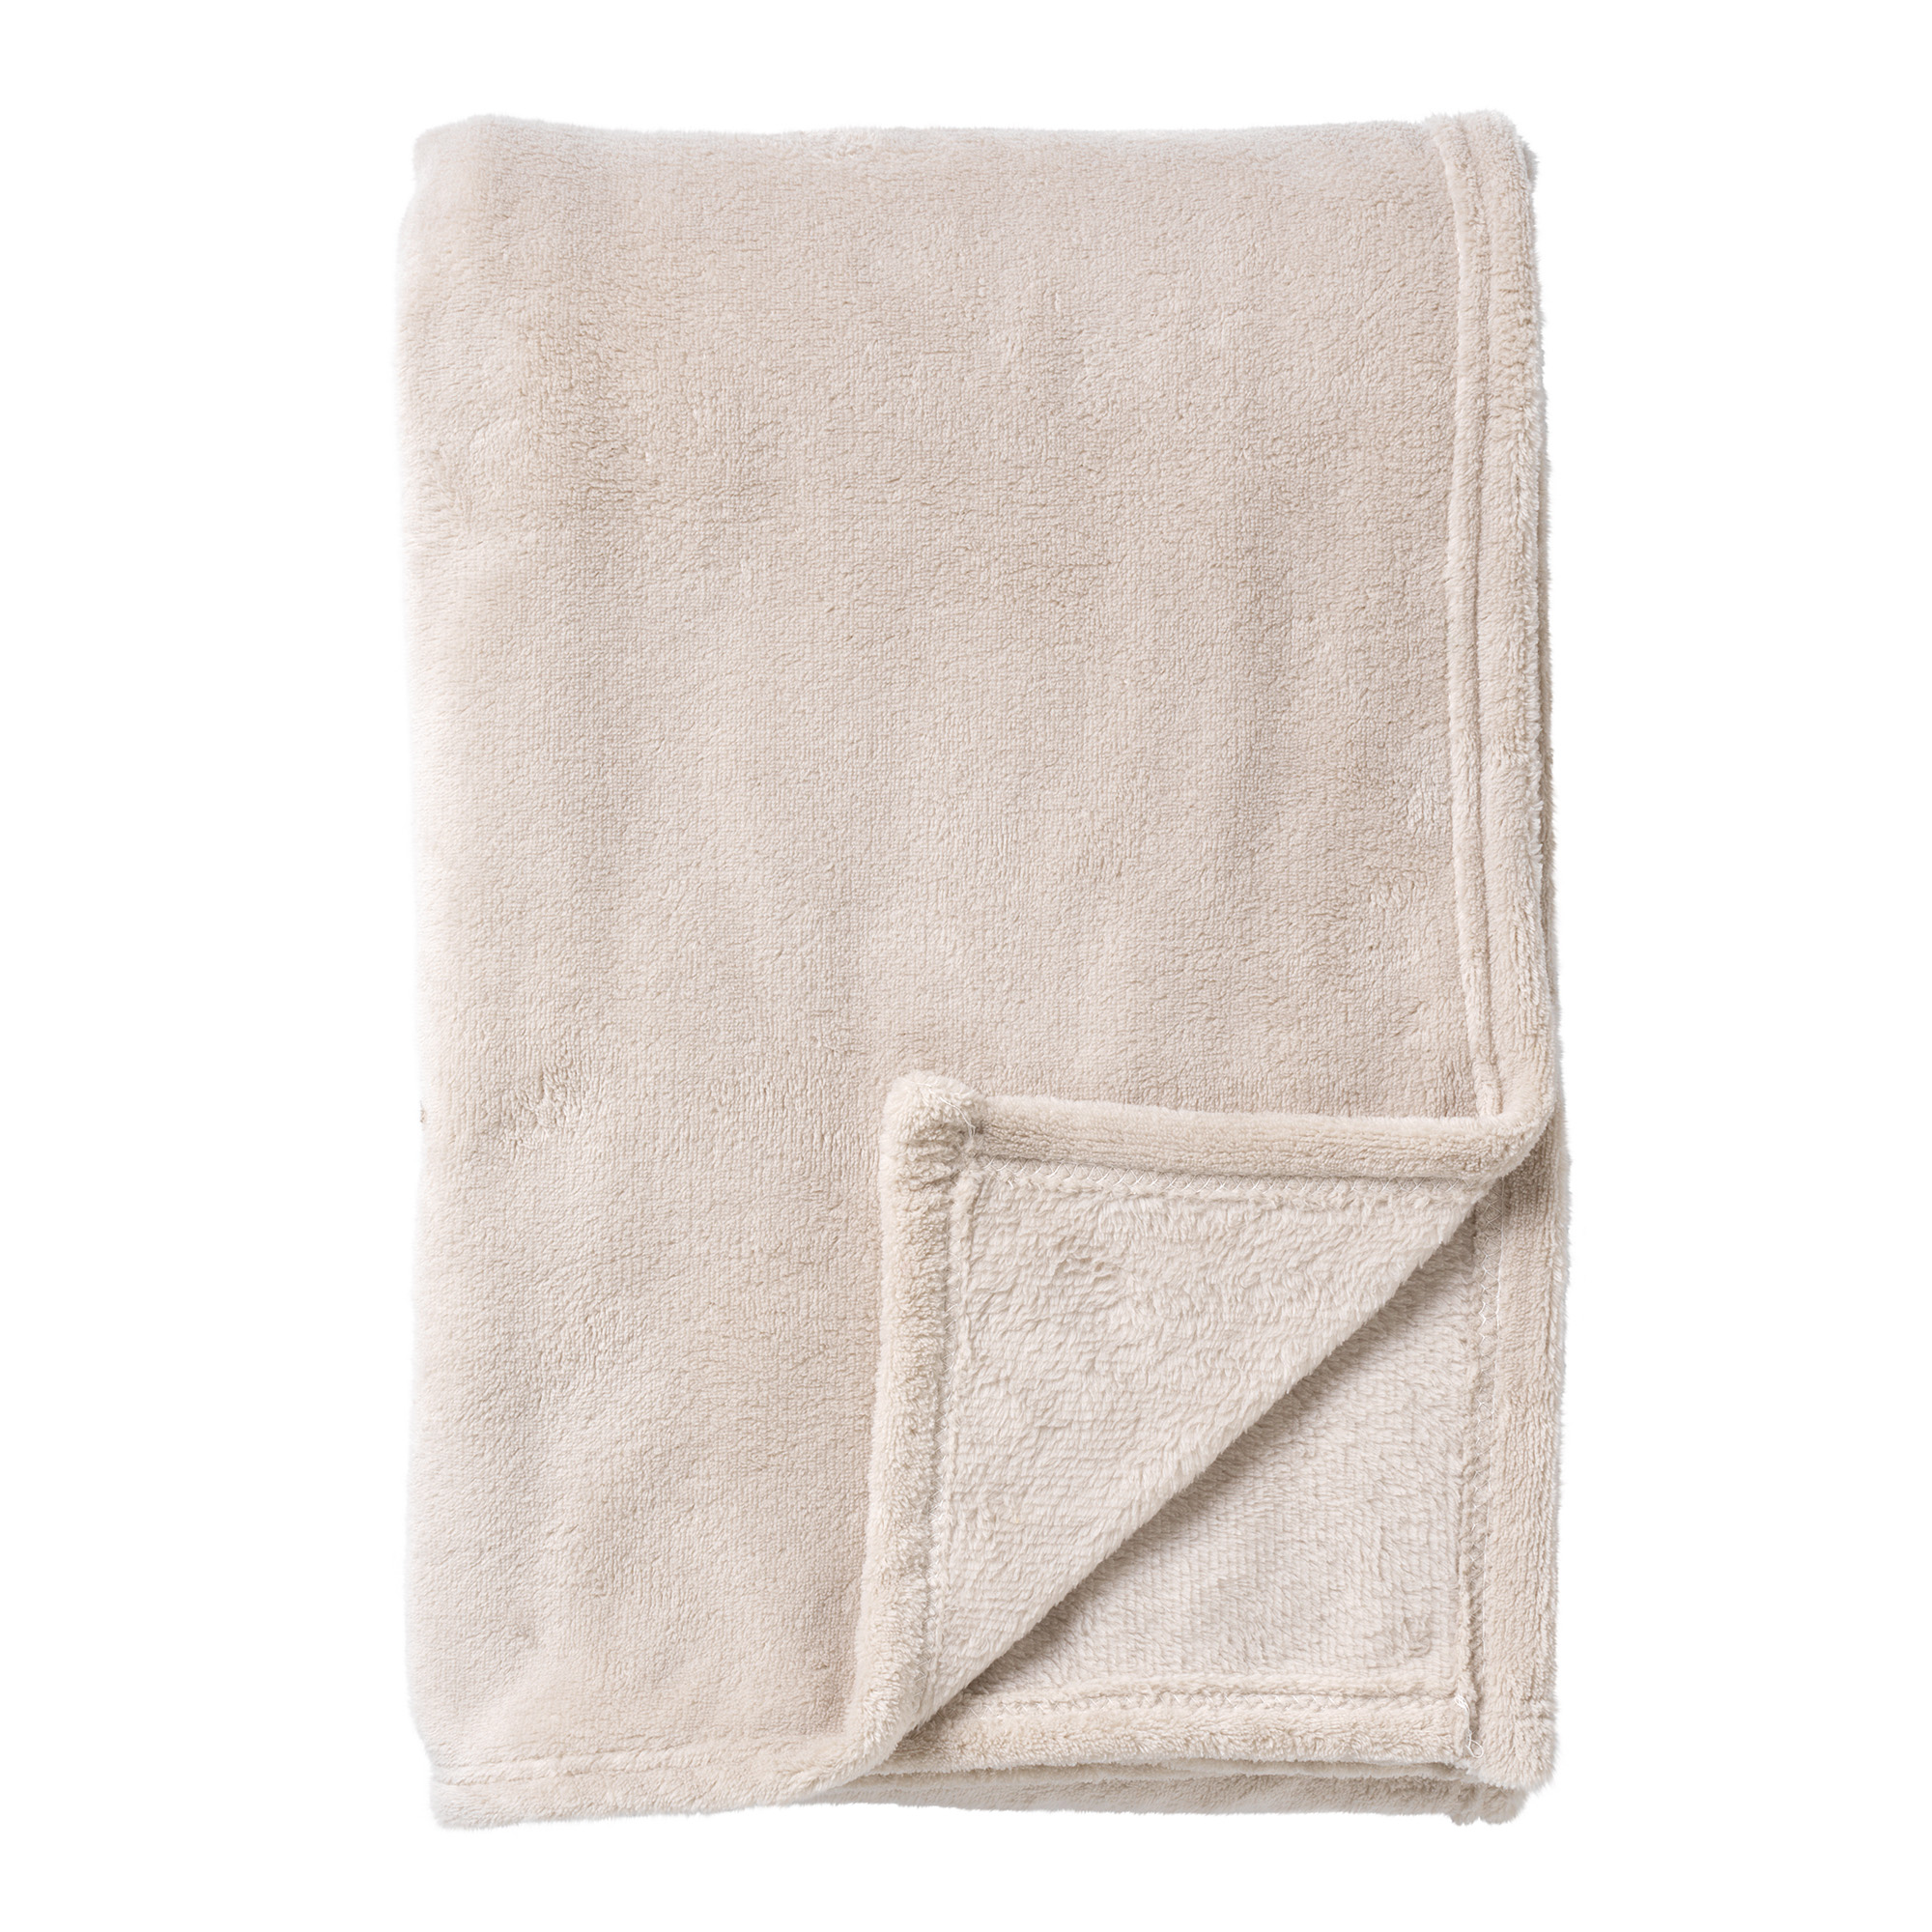 SIDNEY - Plaid 140x180 cm - Fleece deken van 100% gerecycled polyester – superzacht - Eco Line collectie - Pumice Stone - beige